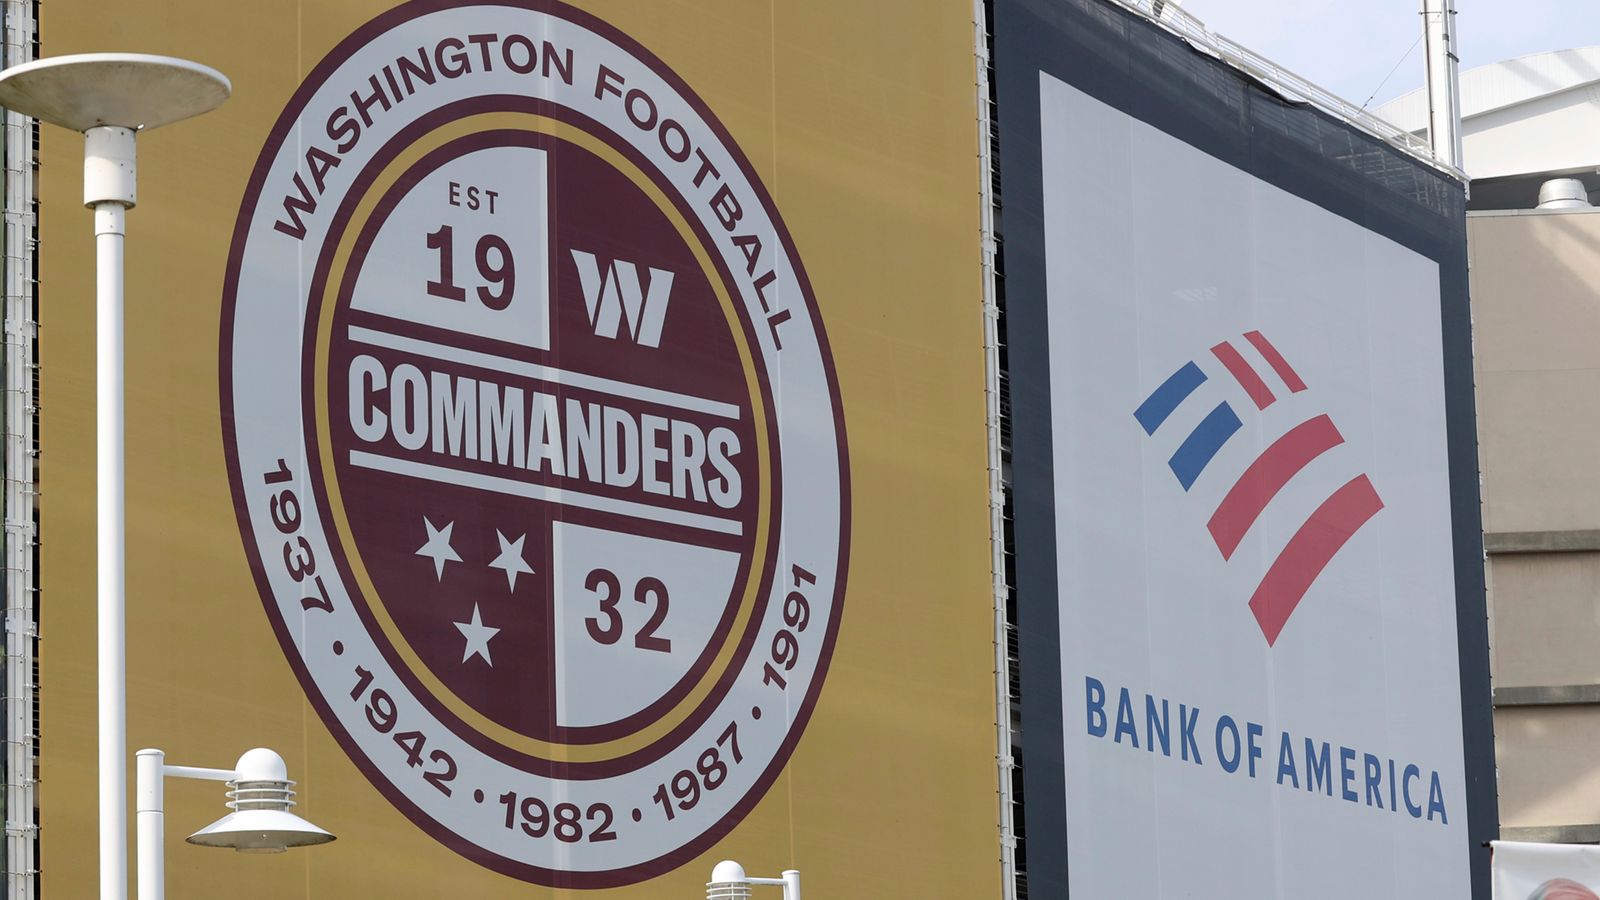 Washington Commanders ranked last in NFL Players Association survey as Minnesota Vikings earn top spot